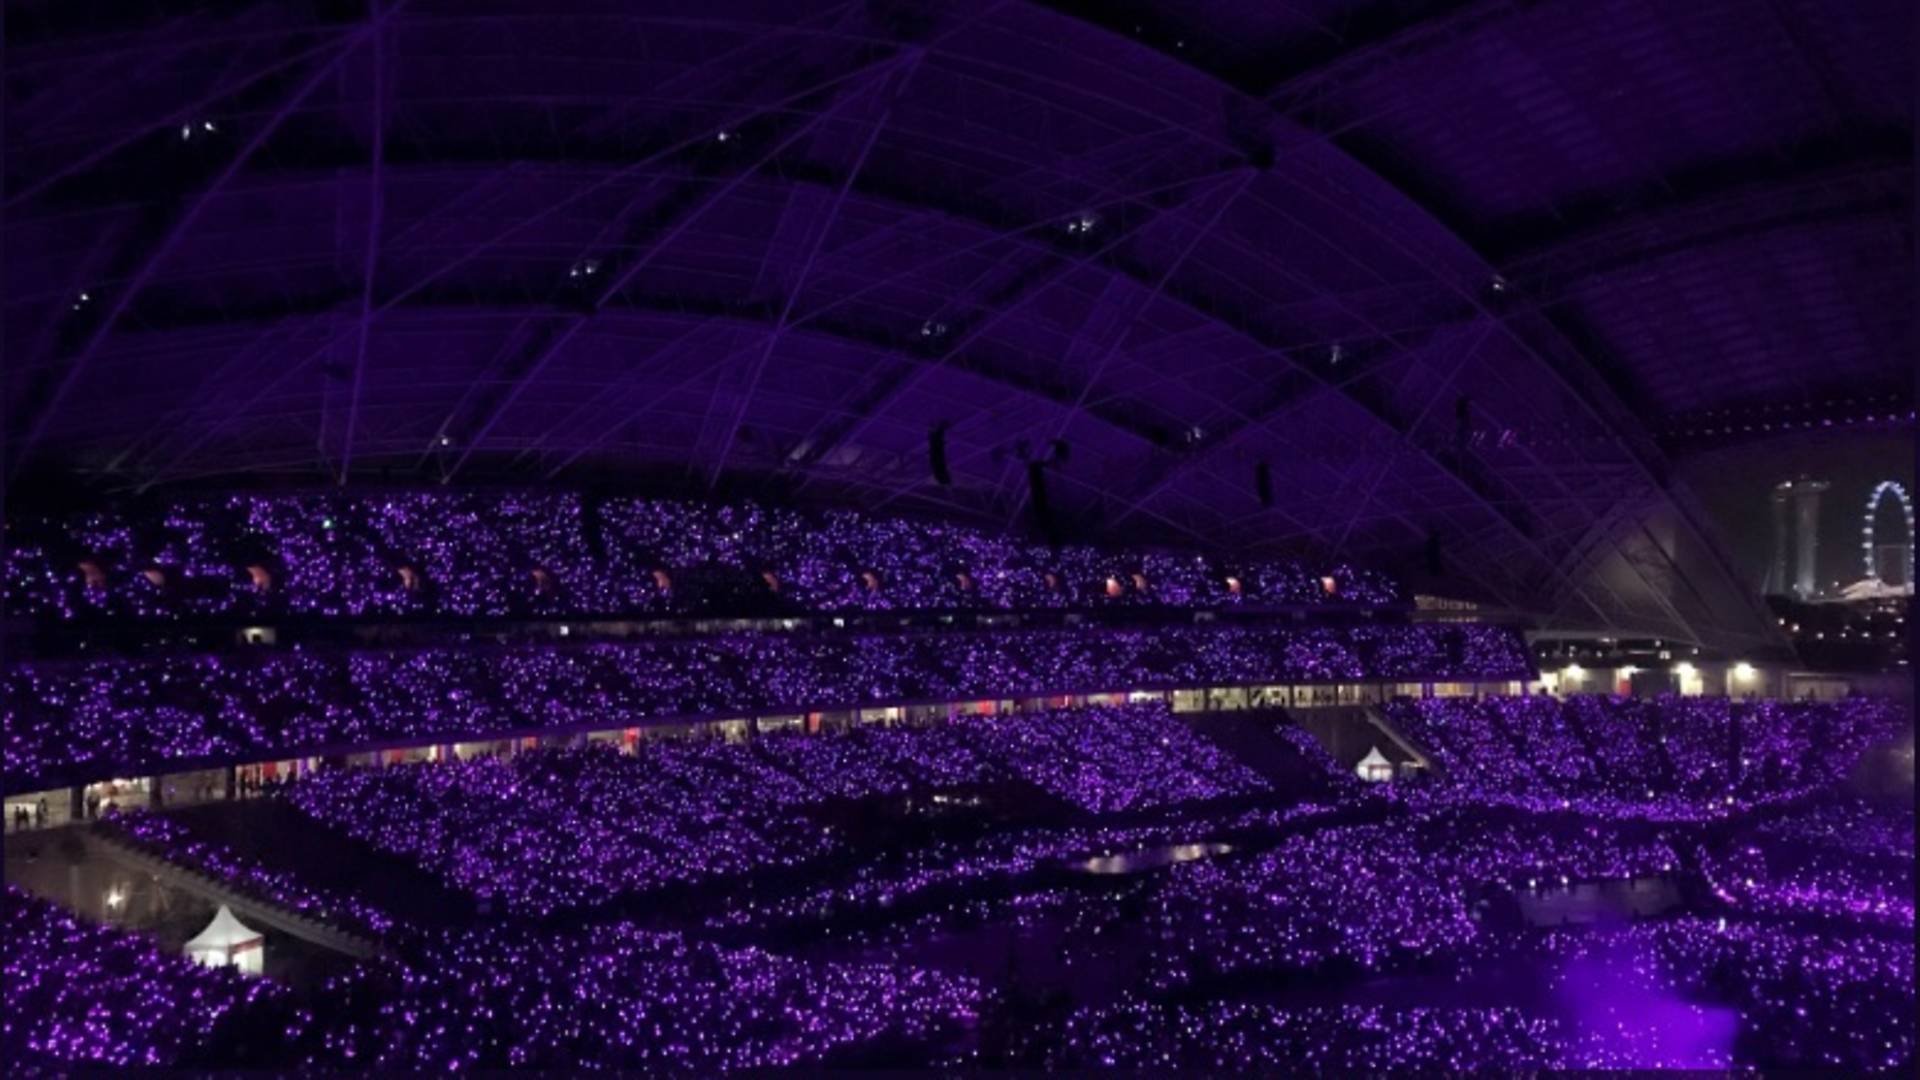 bts army wallpaper, violet, purple, sport venue, arena, light, stadium, lighting, lavender, sky, auditorium